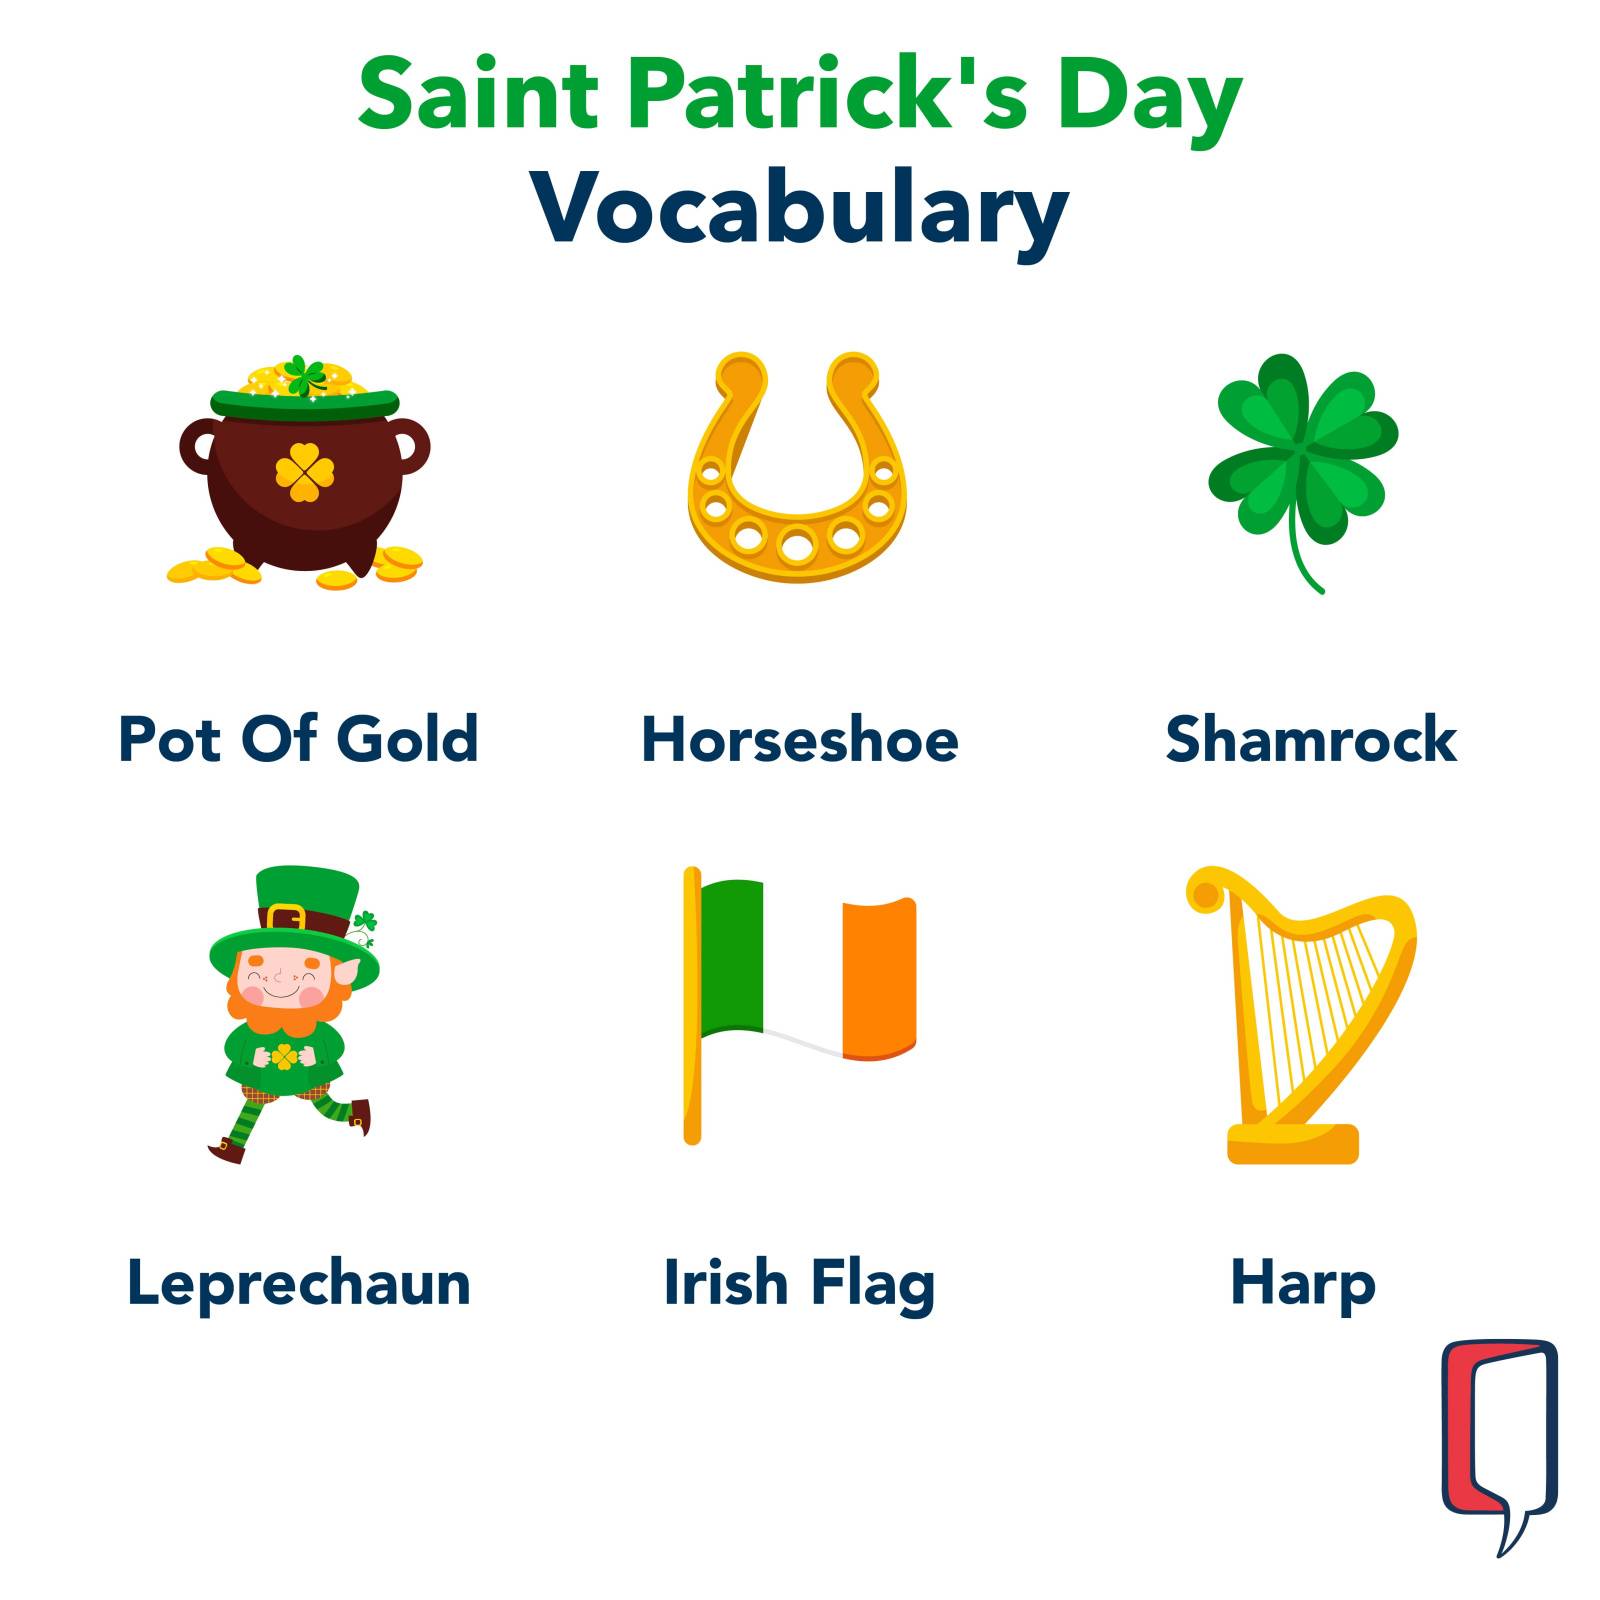 St Patrick's Day Vocabulary - Pot of gold, horseshoe, shamrock, leprechaun, Irish flag, harp